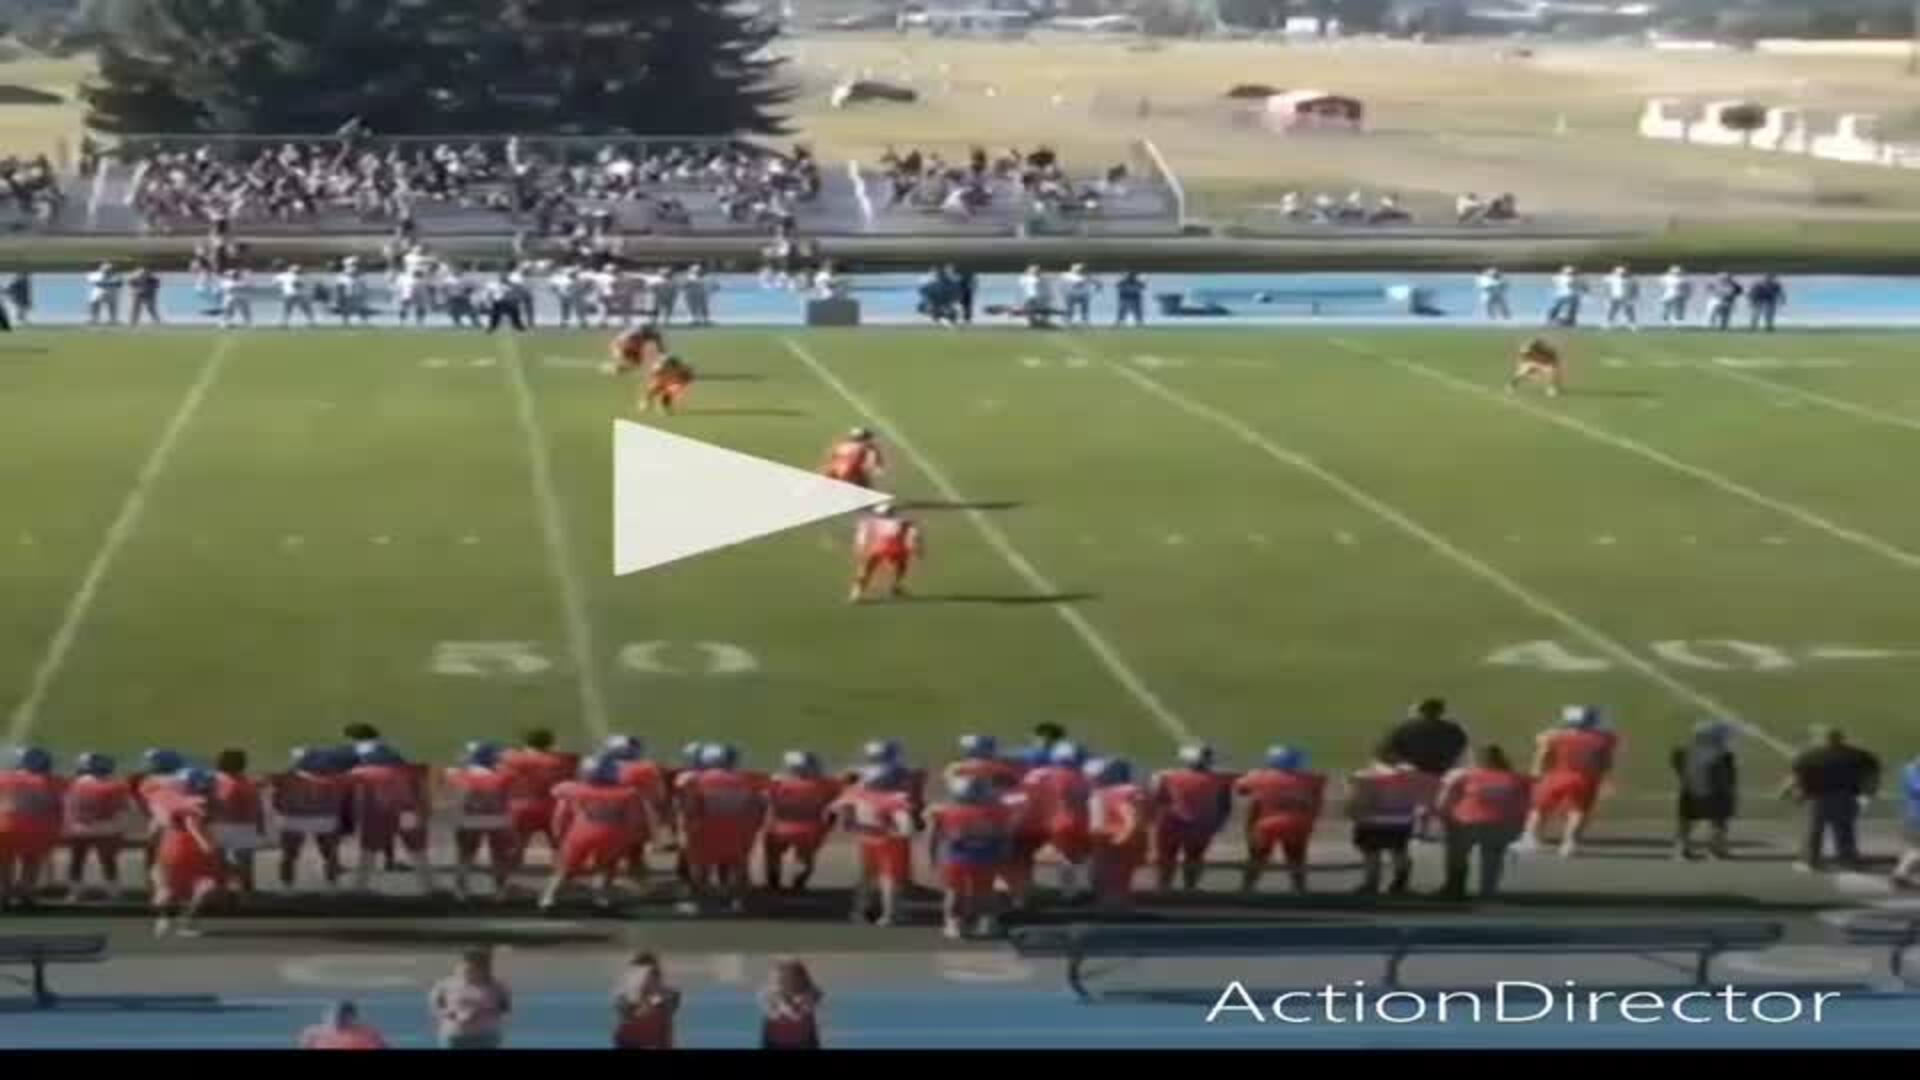 Videos - Coeur d'Alene Vikings (Coeur d'Alene, ID) Varsity Football